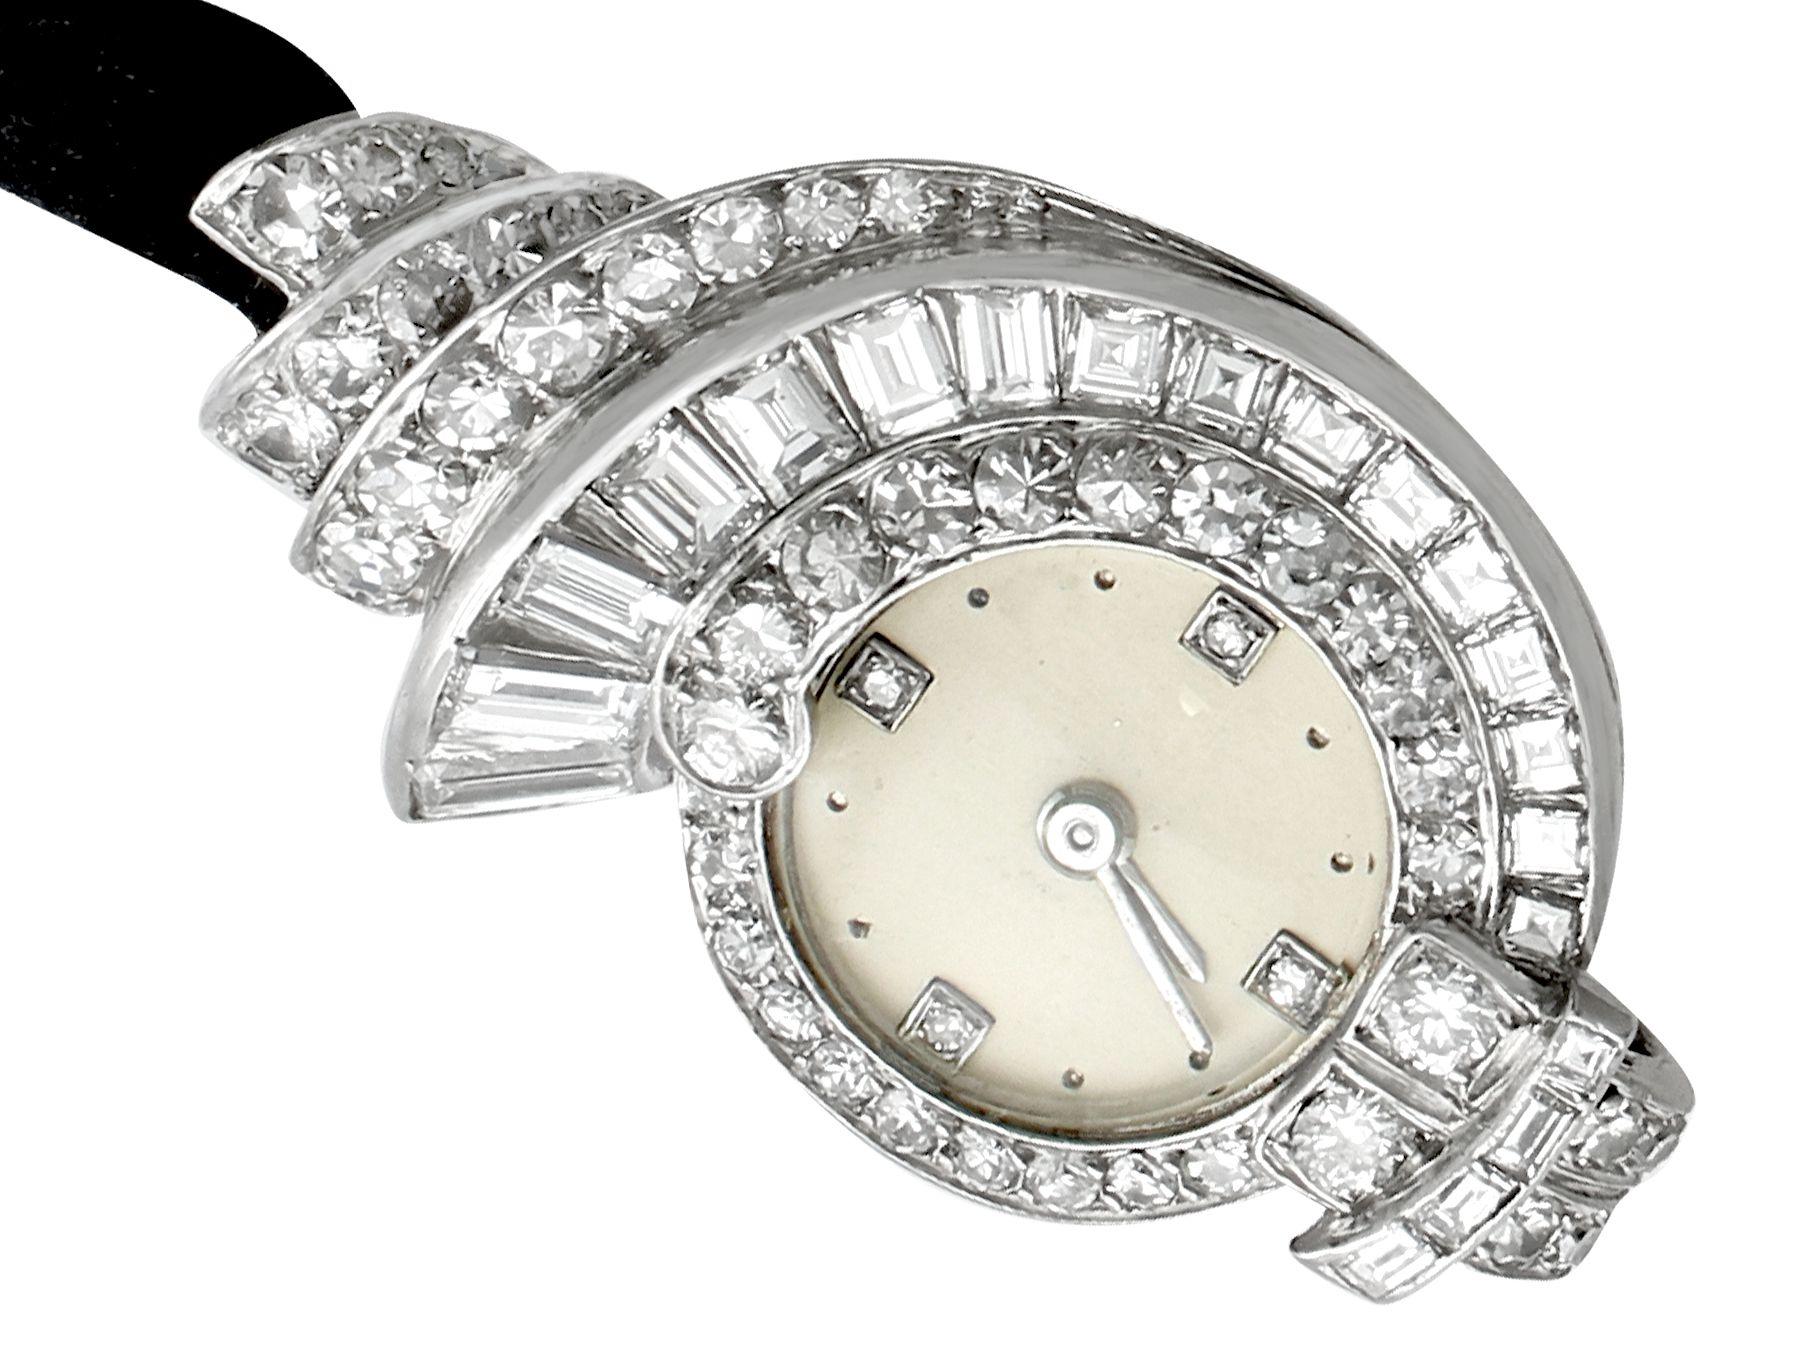 Art Deco Antique French 3.07 Carat Diamond Cocktail Watch in Platinum